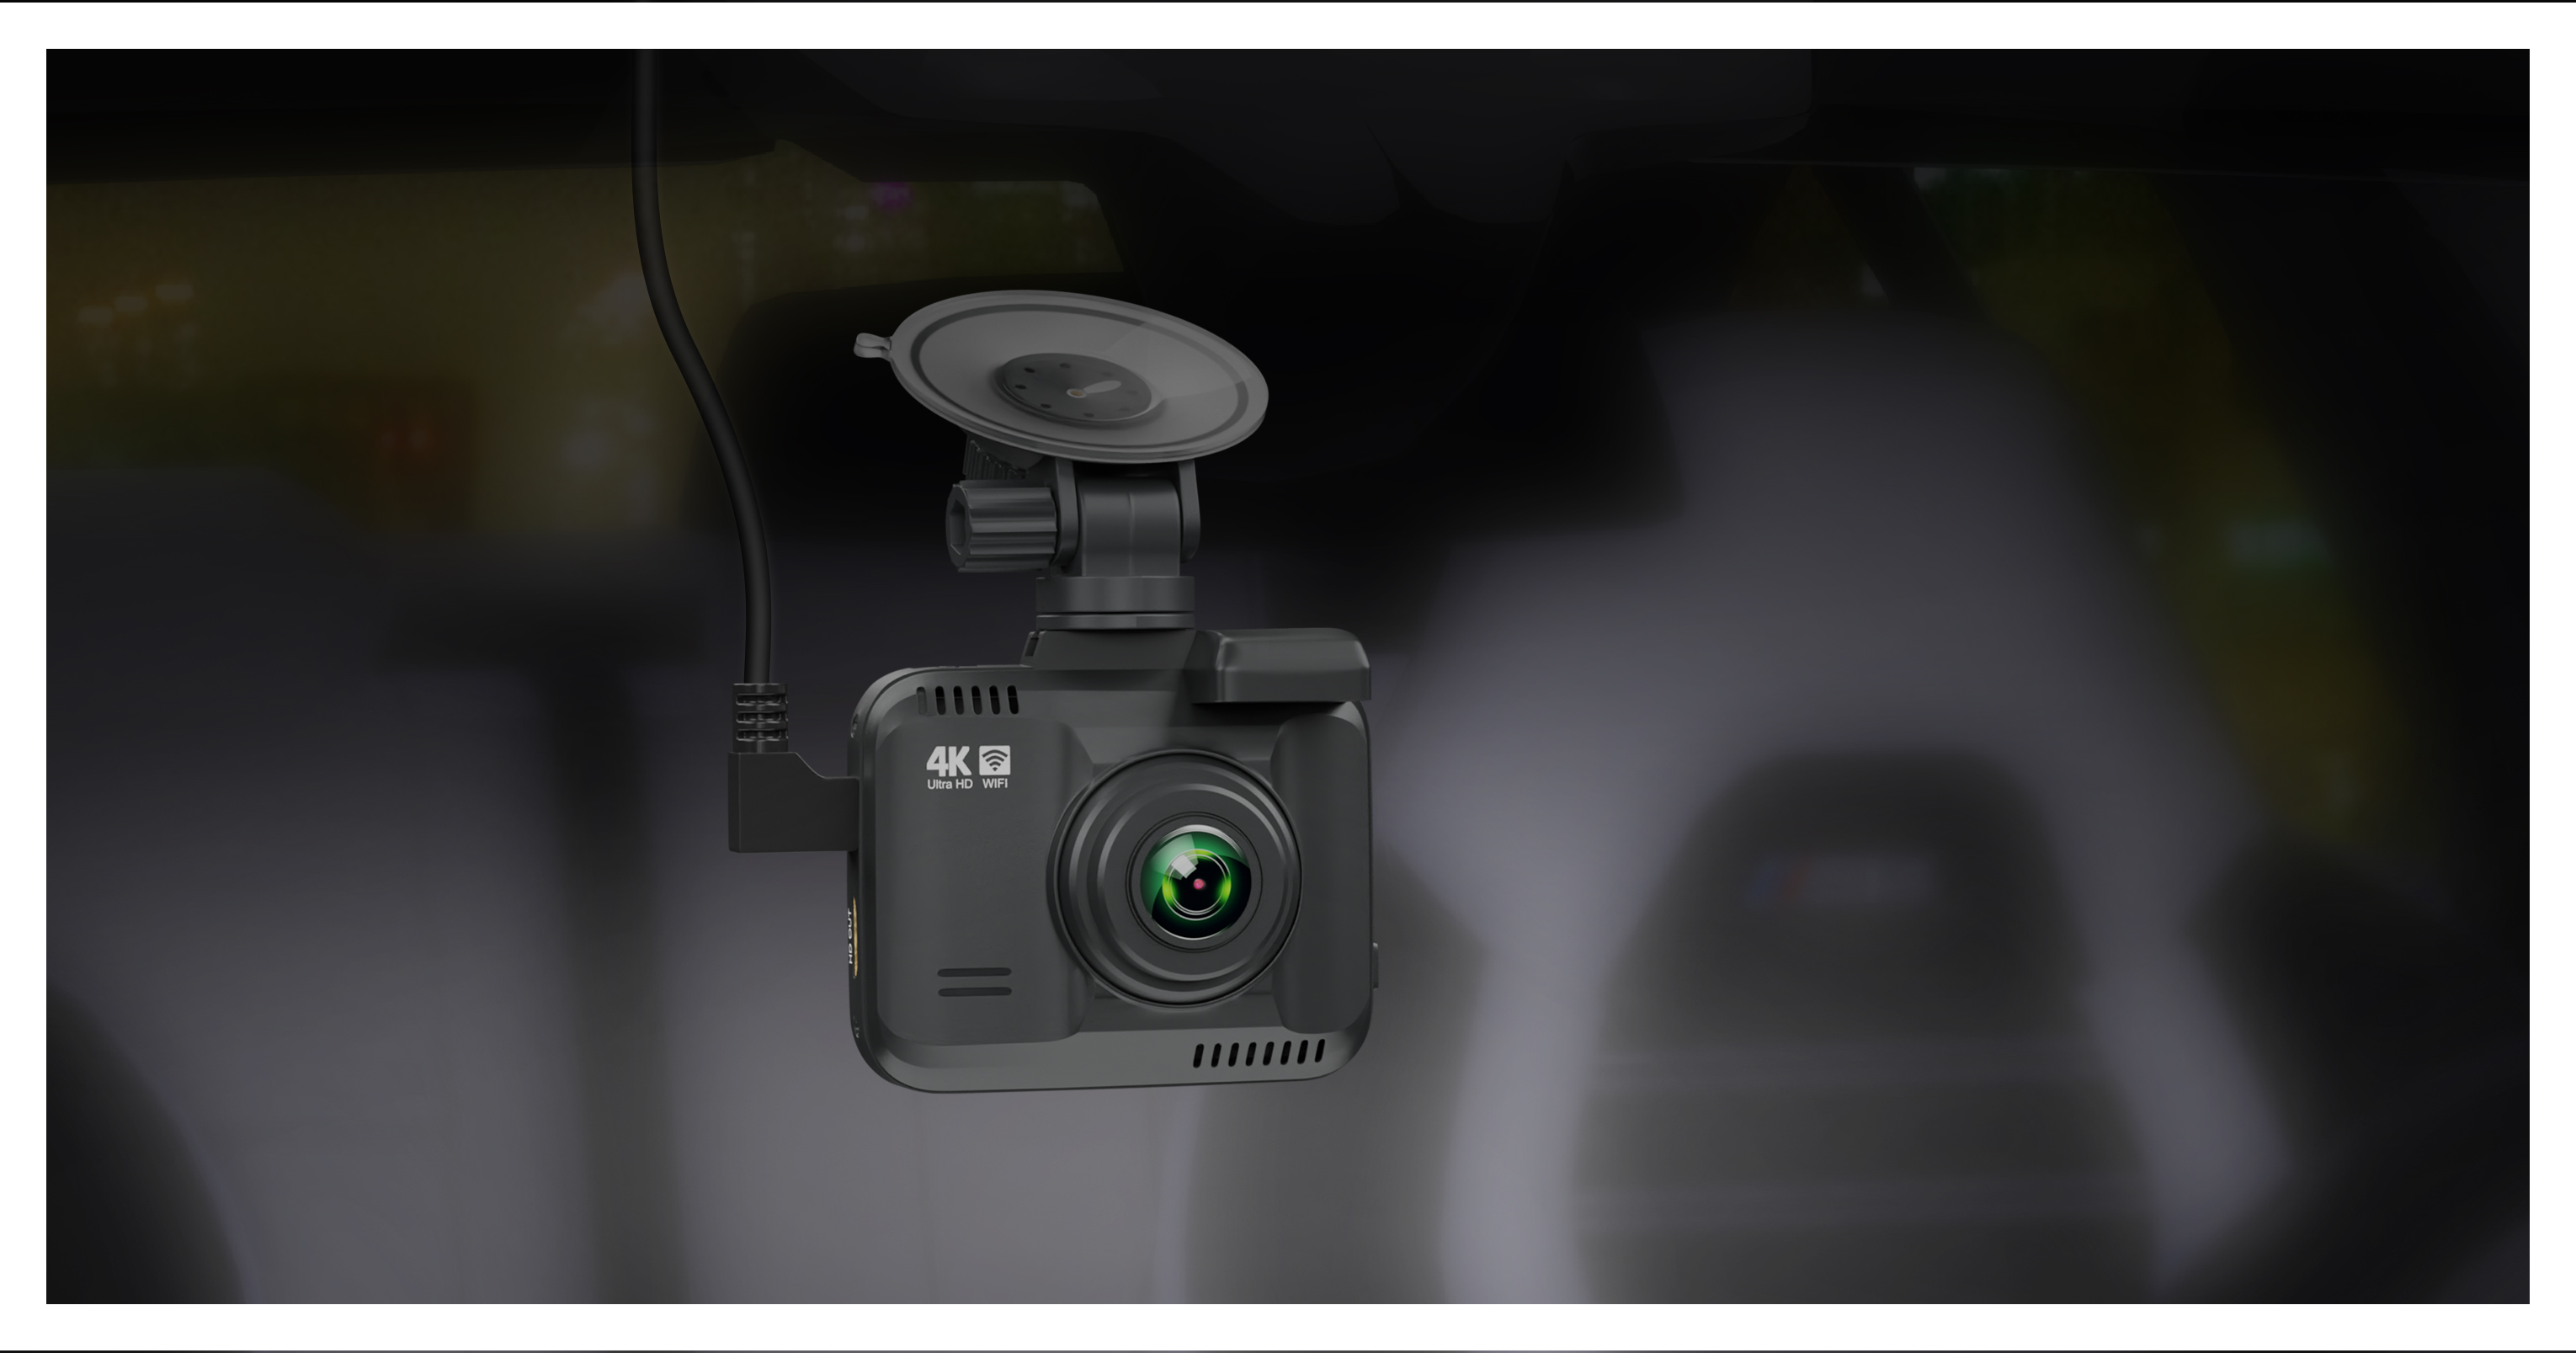 Rove R2-4K Car Dash Cam - 4K Ultra HD 2160P - Built-In WiFi & GPS, Parking  Mode